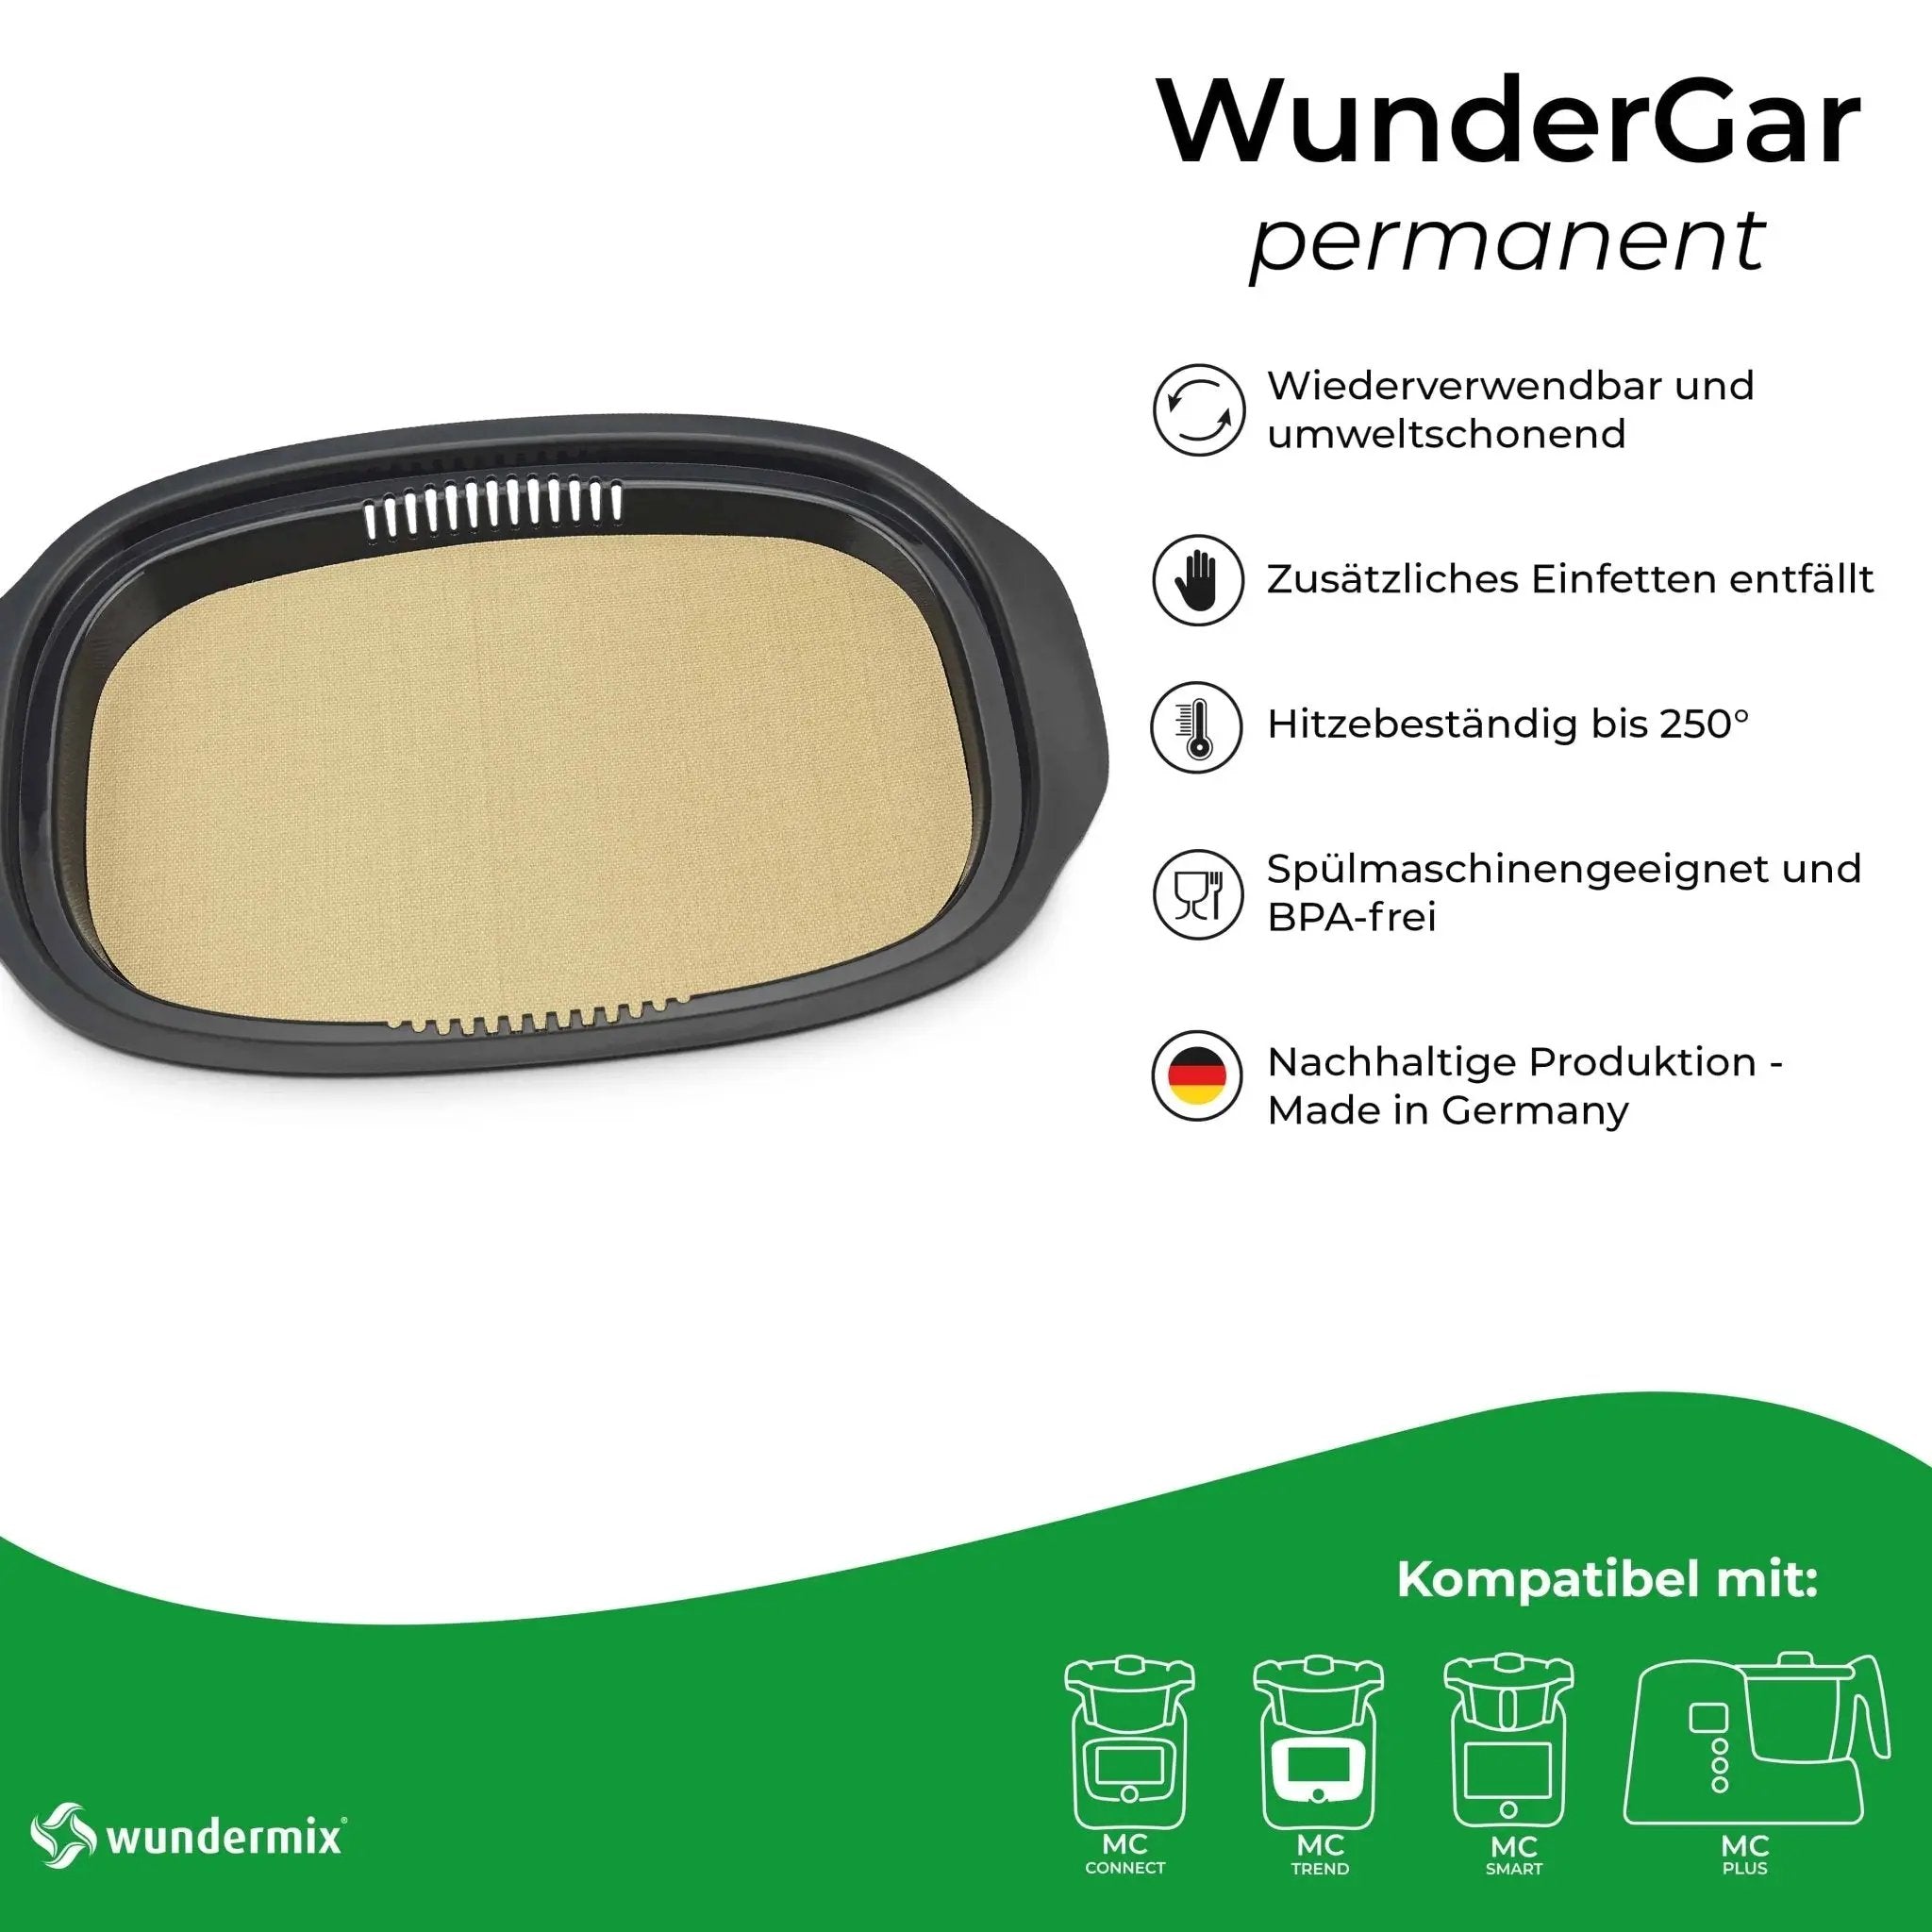 WunderGar® Permanent | Dauerbackfolie für Monsieur Cuisine smart, trend, connect und éditon plus - Wundermix GmbH